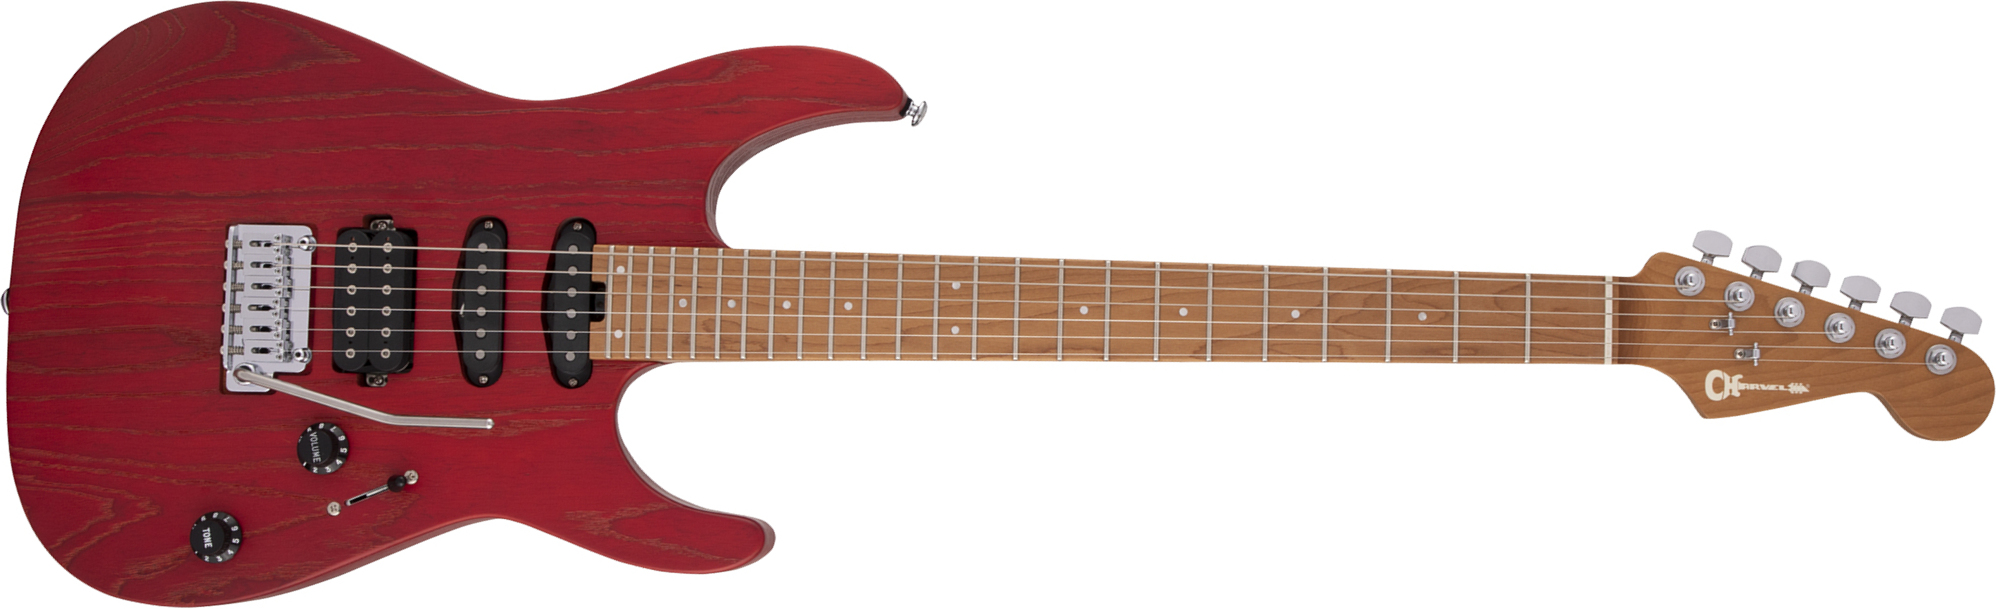 Charvel Dinky Dk24 Hss 2pt Cm Ash Pro-mod Seymour Duncan Trem Mn - Red Ash - Elektrische gitaar in Str-vorm - Main picture